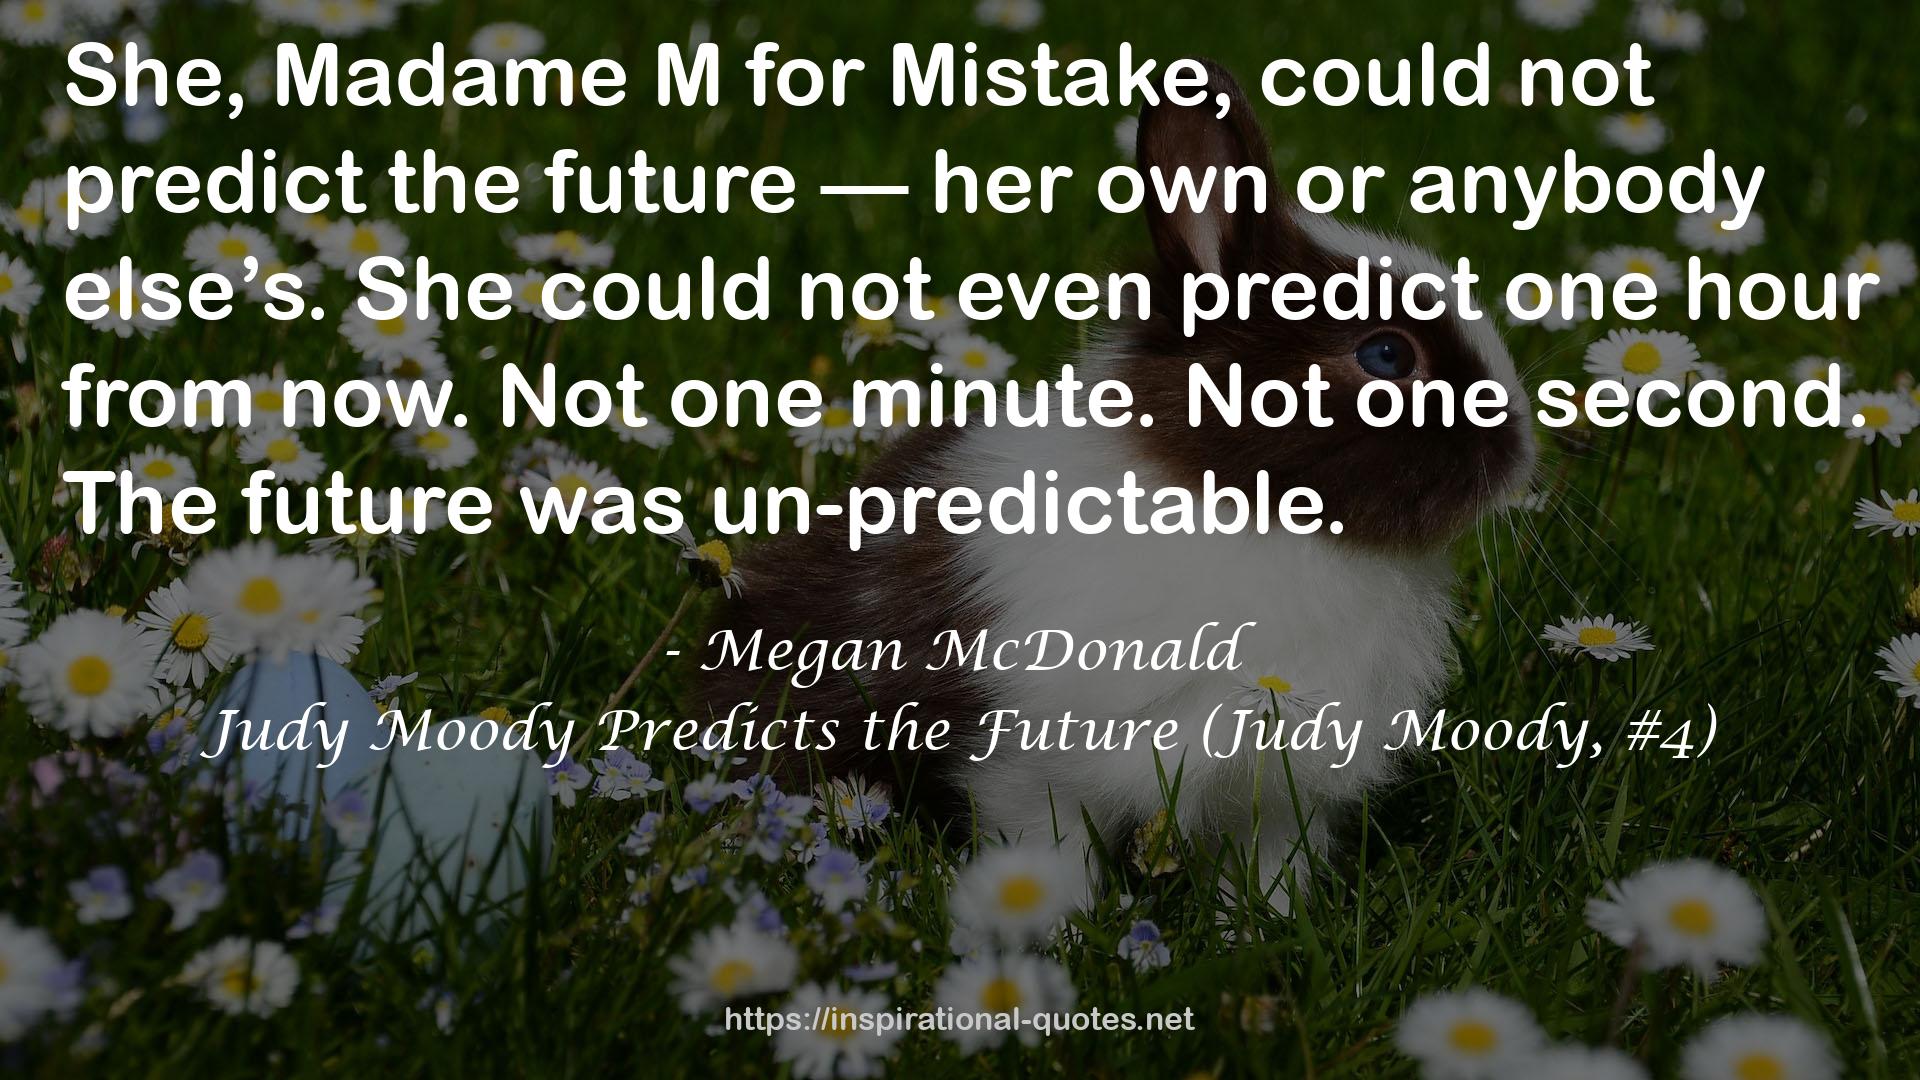 Judy Moody Predicts the Future (Judy Moody, #4) QUOTES